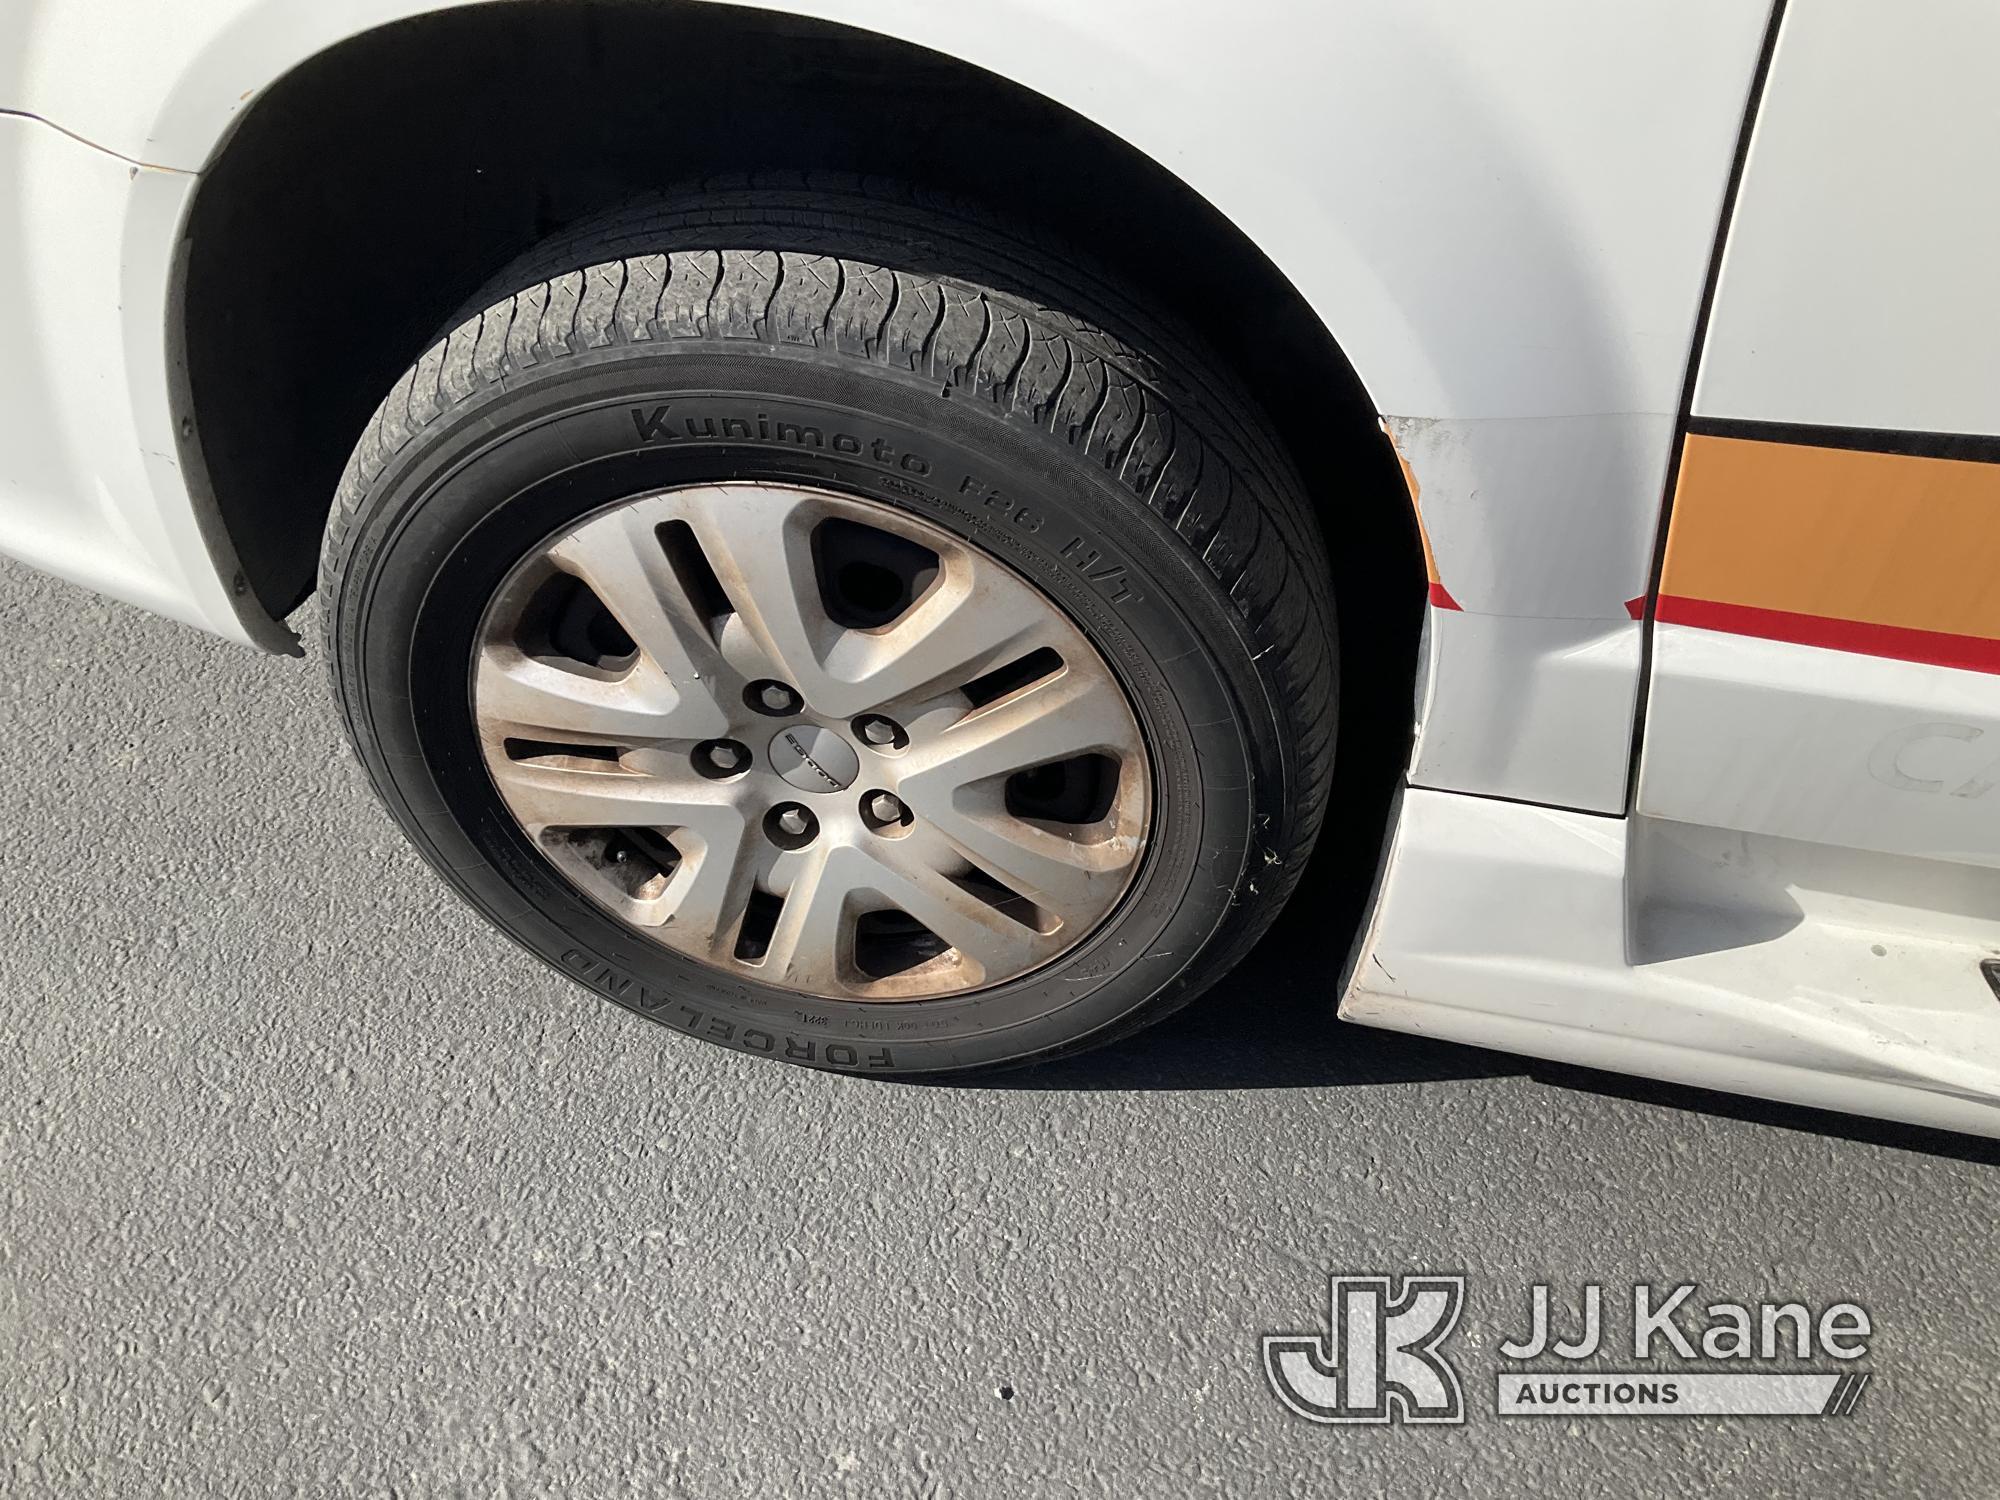 (Jurupa Valley, CA) 2014 Dodge Grand Caravan SE Sports Van Runs But Will Not Stay Running Without A